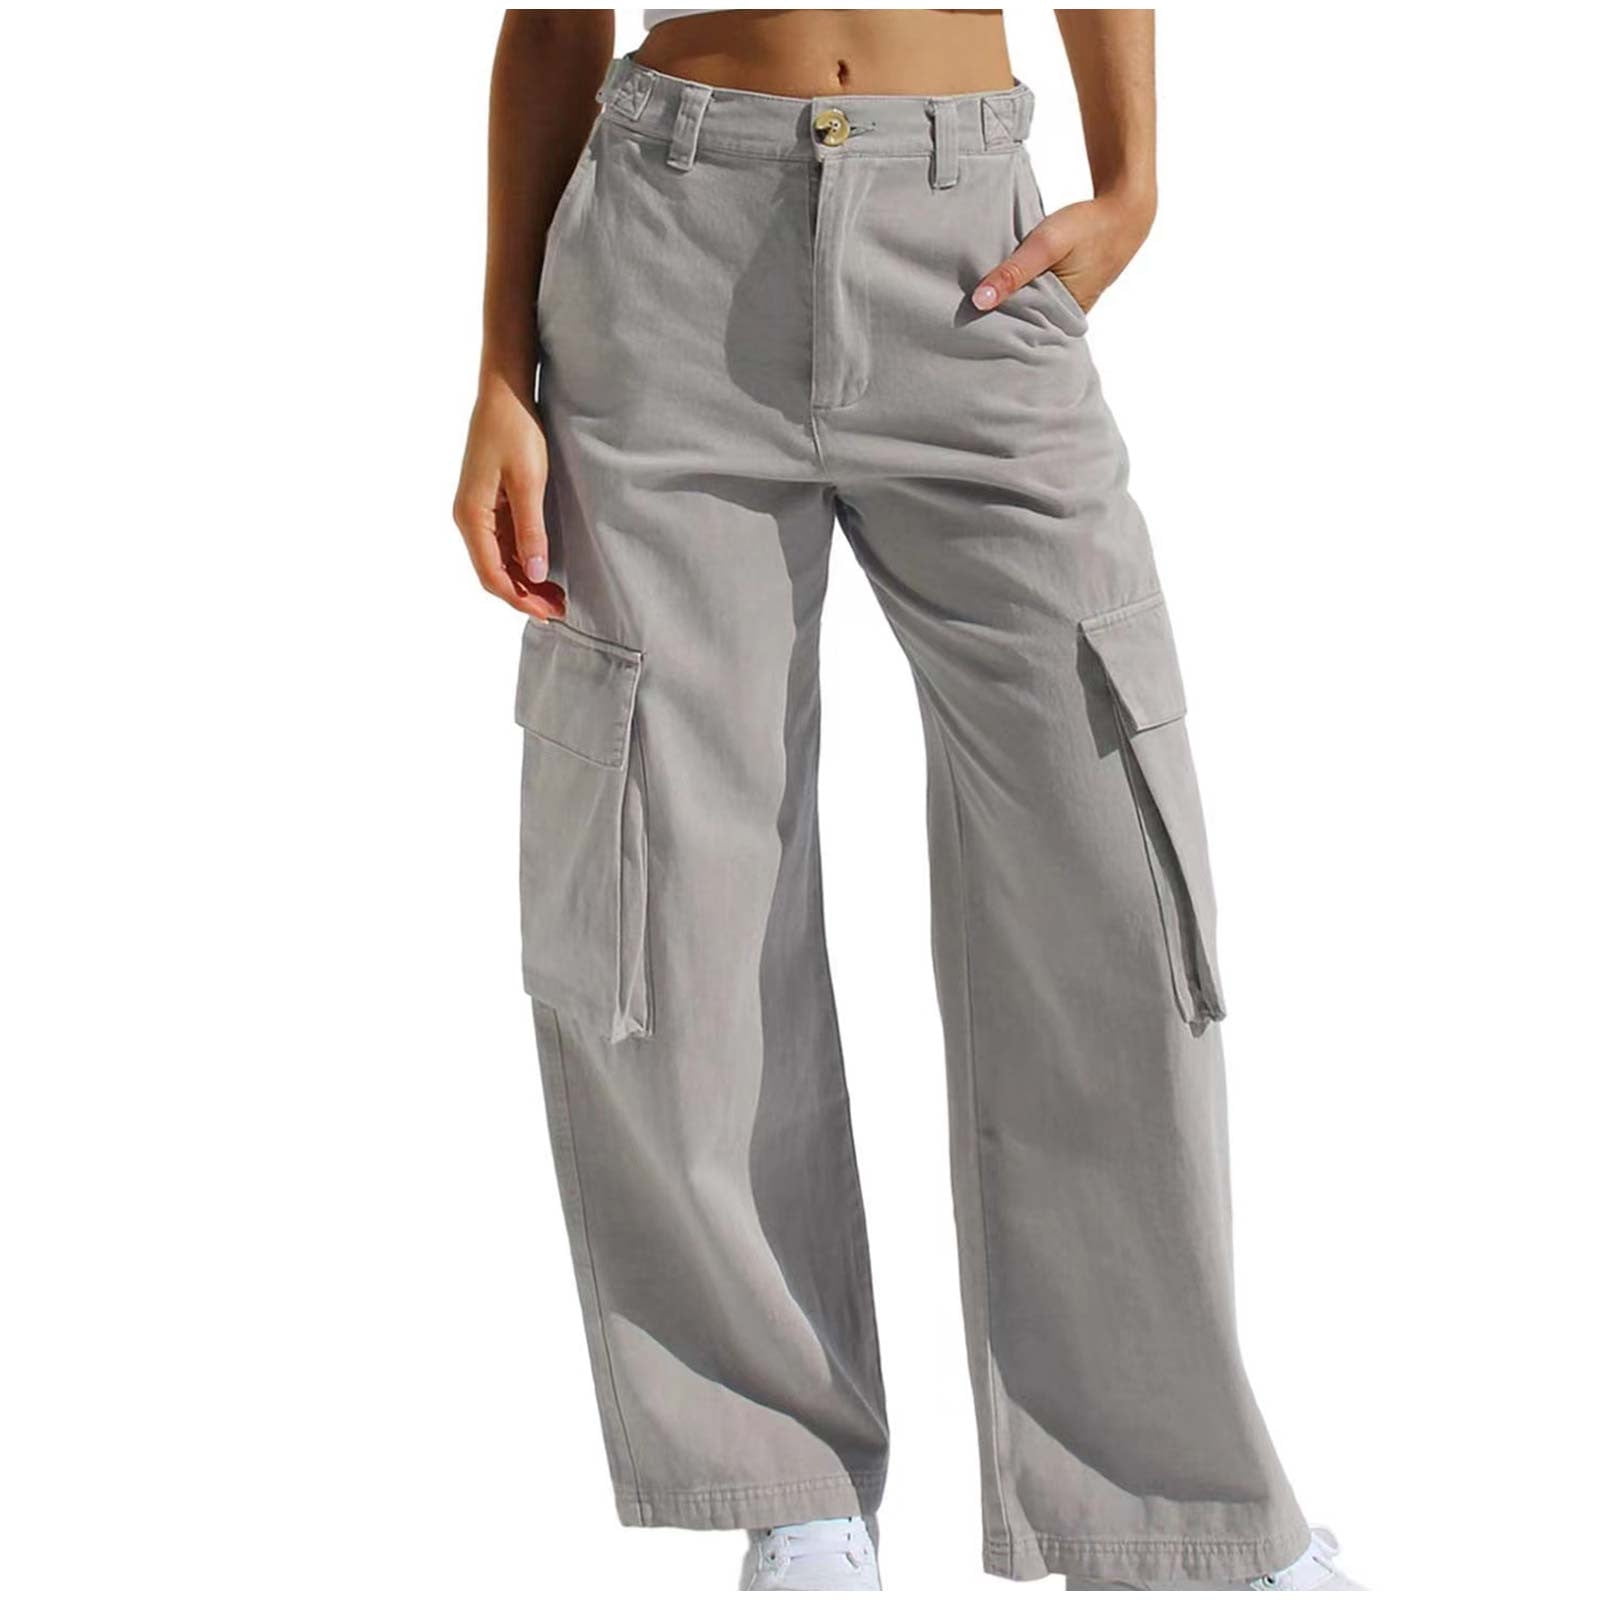 XFLWAM Women's High Waisted Cargo Baggy Jeans Flap Pocket Side Denim Pants  Straight Leg Streetwear Trousers with Big Pockets Gray S